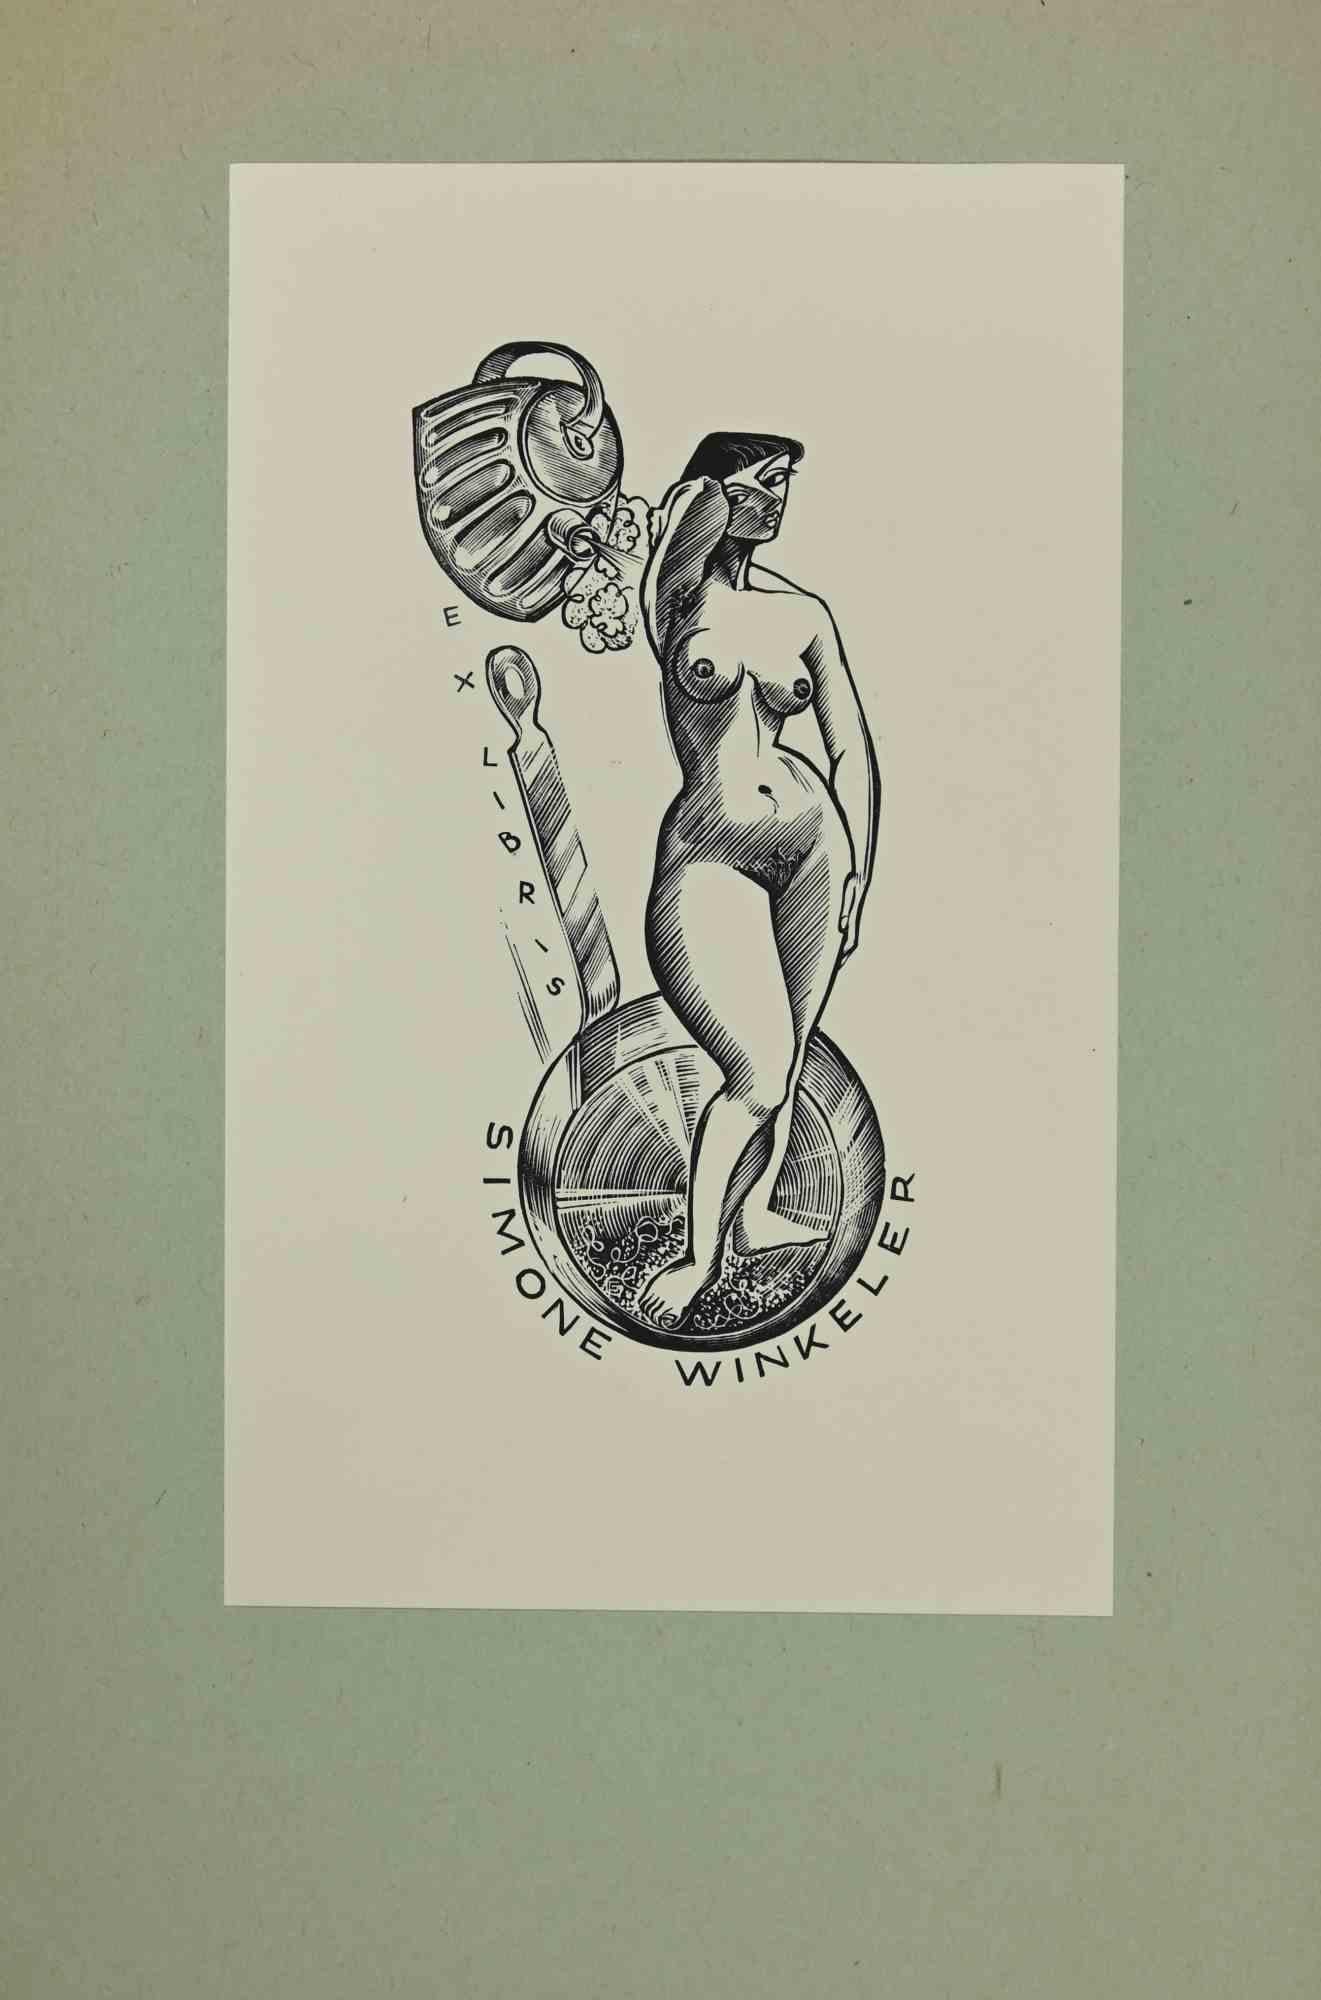 Unknown Figurative Print - Ex-Libris - Simone Winkeler - Woodcut - Mid 20th Century